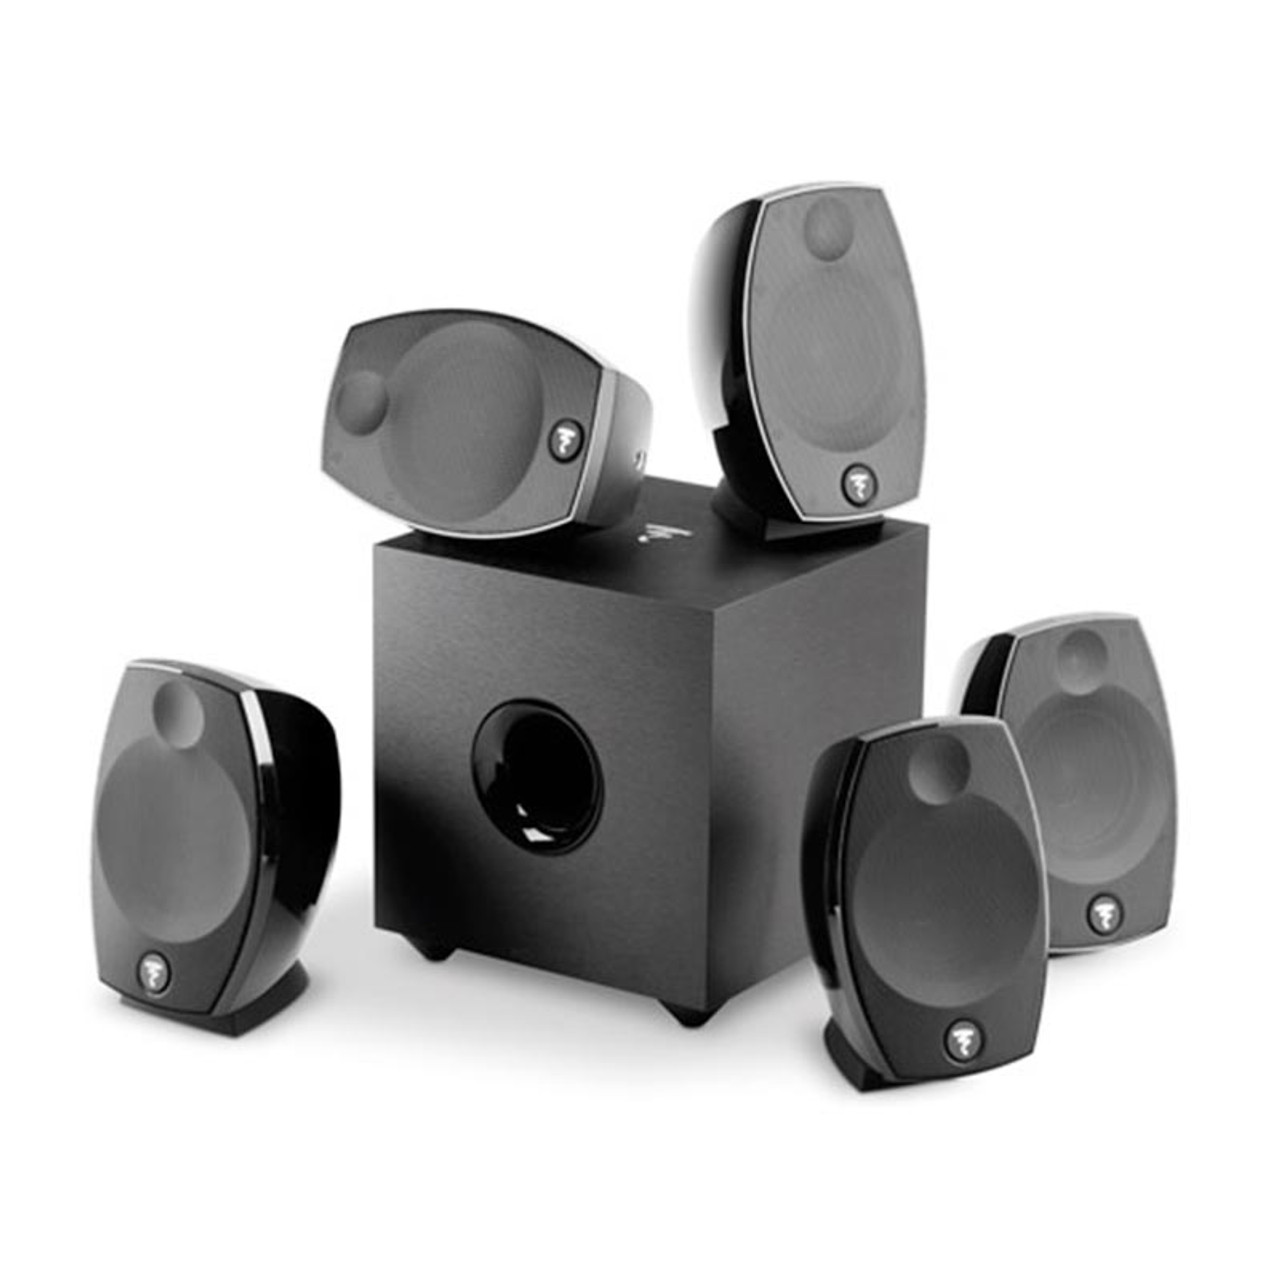 Focal Sib Evo 5.1 Home Theater Speaker System - Open Box - Creative Audio